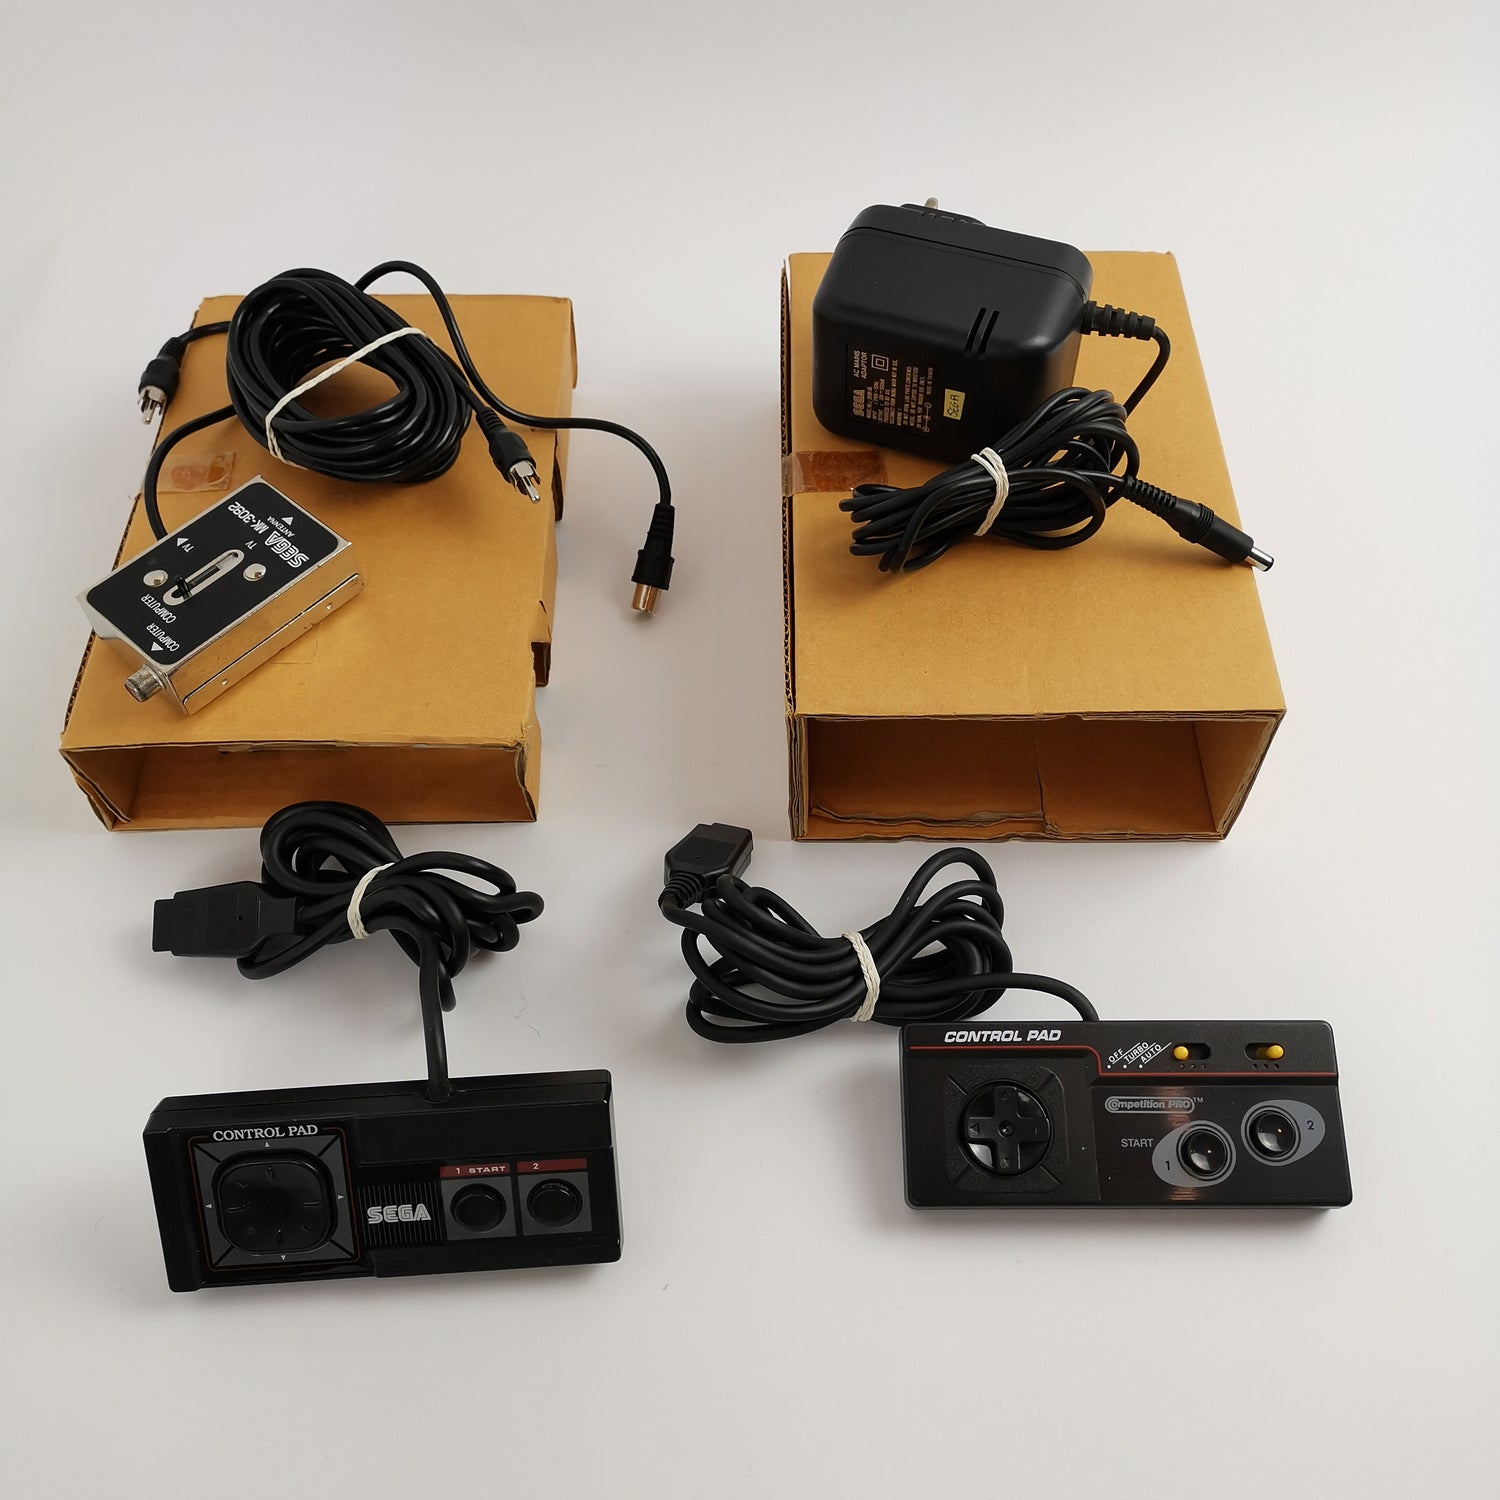 Sega Master System II 2 Konsole Alex Kidd | PAL Console - OVP